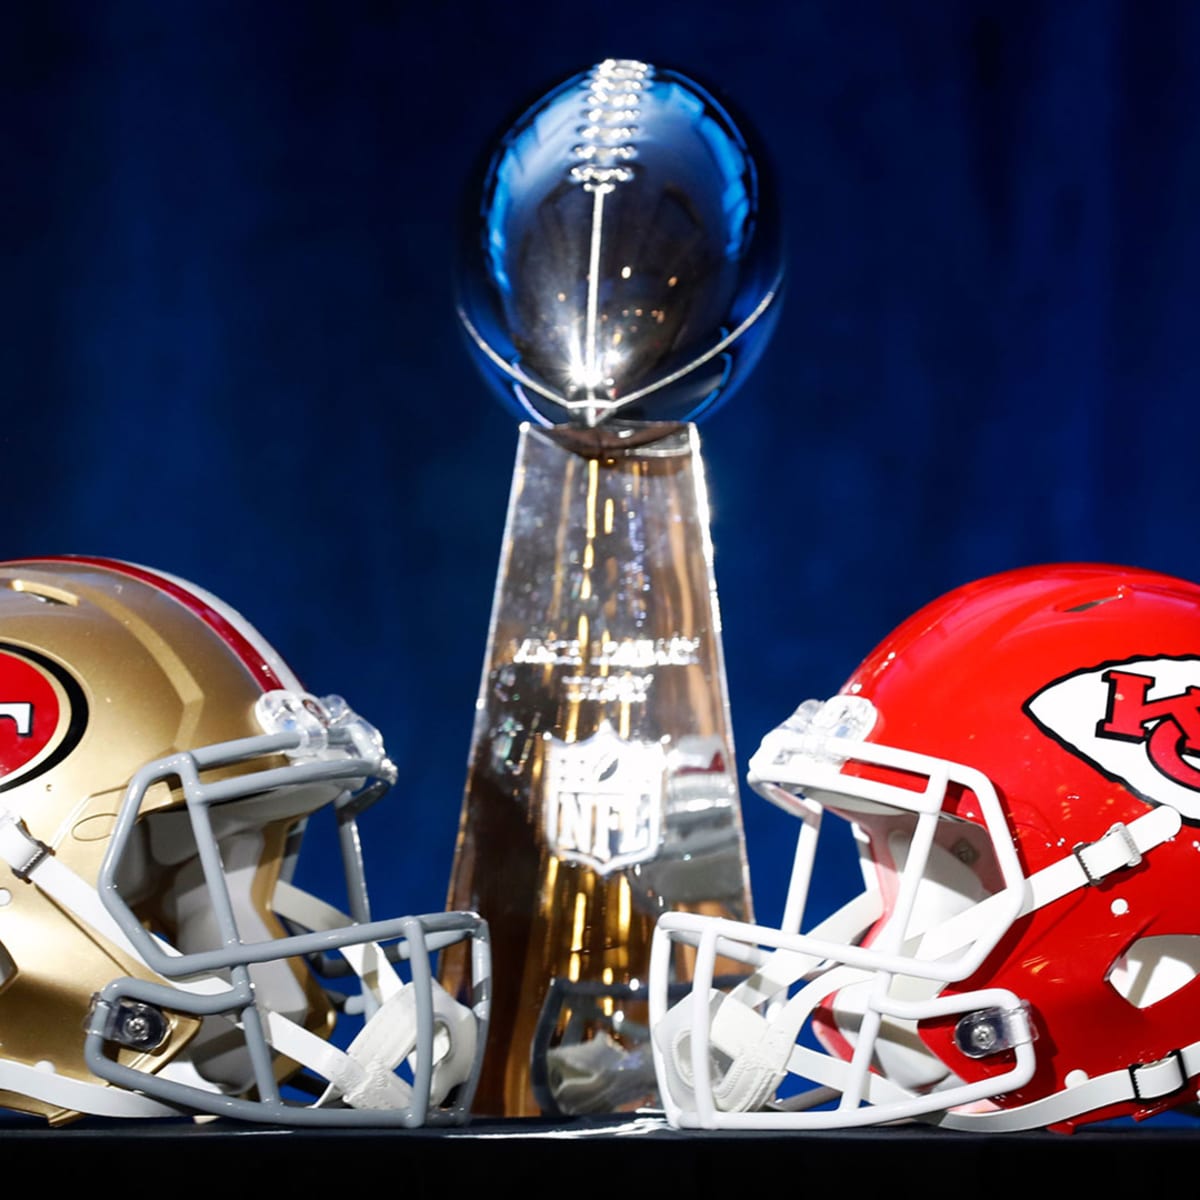 Super Bowl 54 FULL Game: Kansas City Chiefs vs. San Francisco